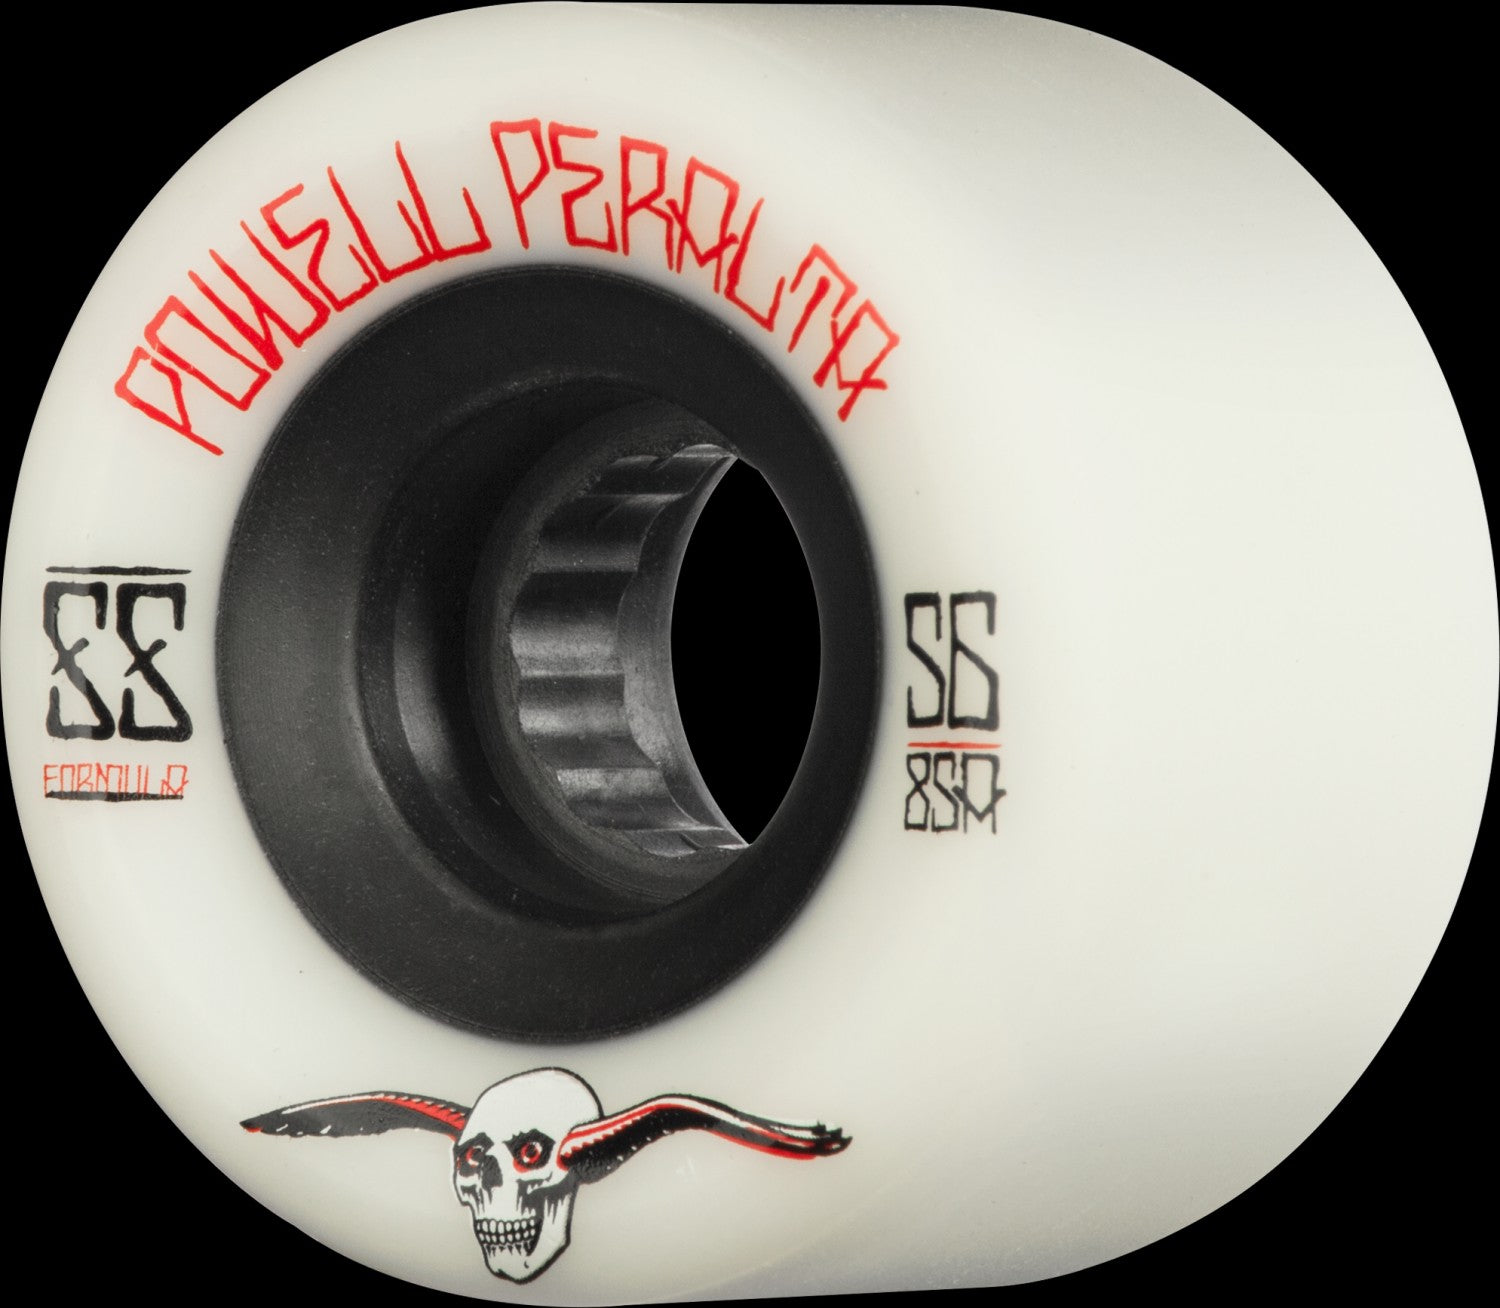 Powell Peralta G-Slides White 85a 56mm Skateboard Wheels